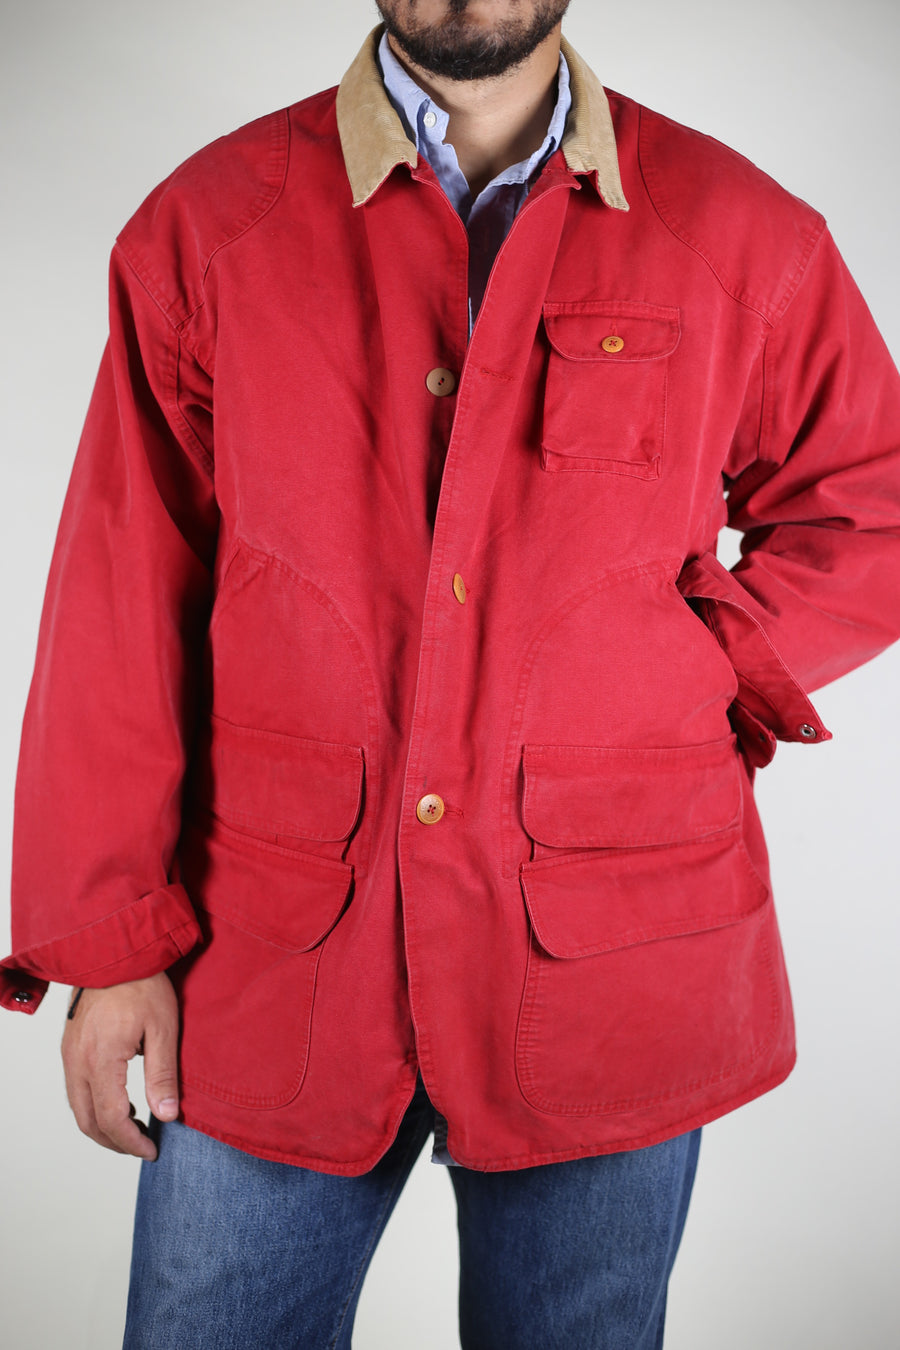 Vintage hunting jacket -XL-